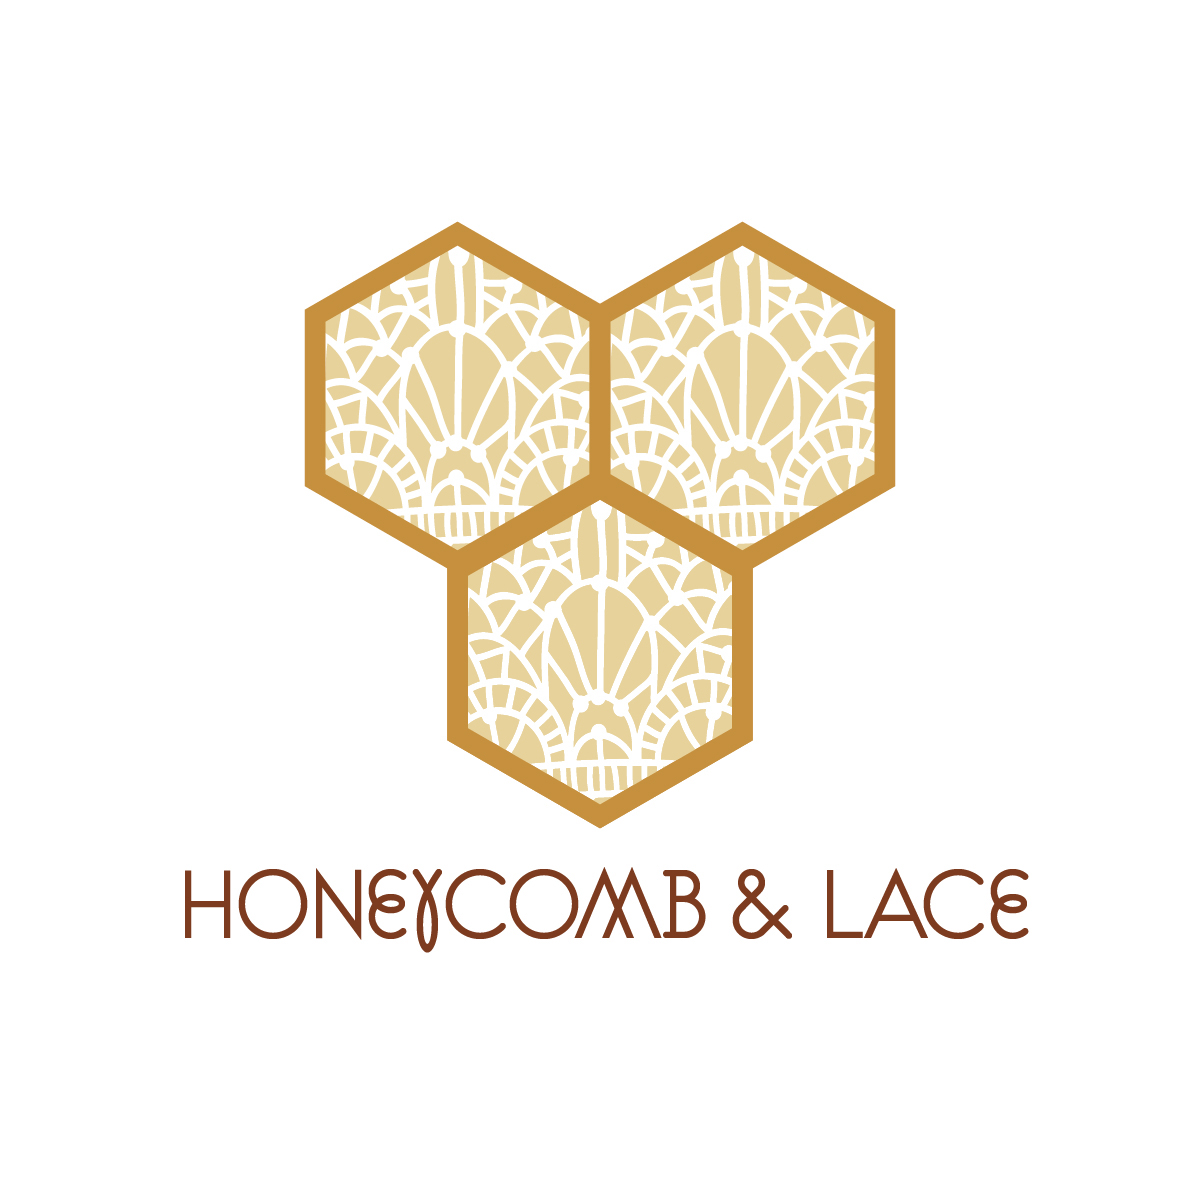 logo lace delicate visual local identity brand Unique business entreprenuer pattern nautal earthtone simple